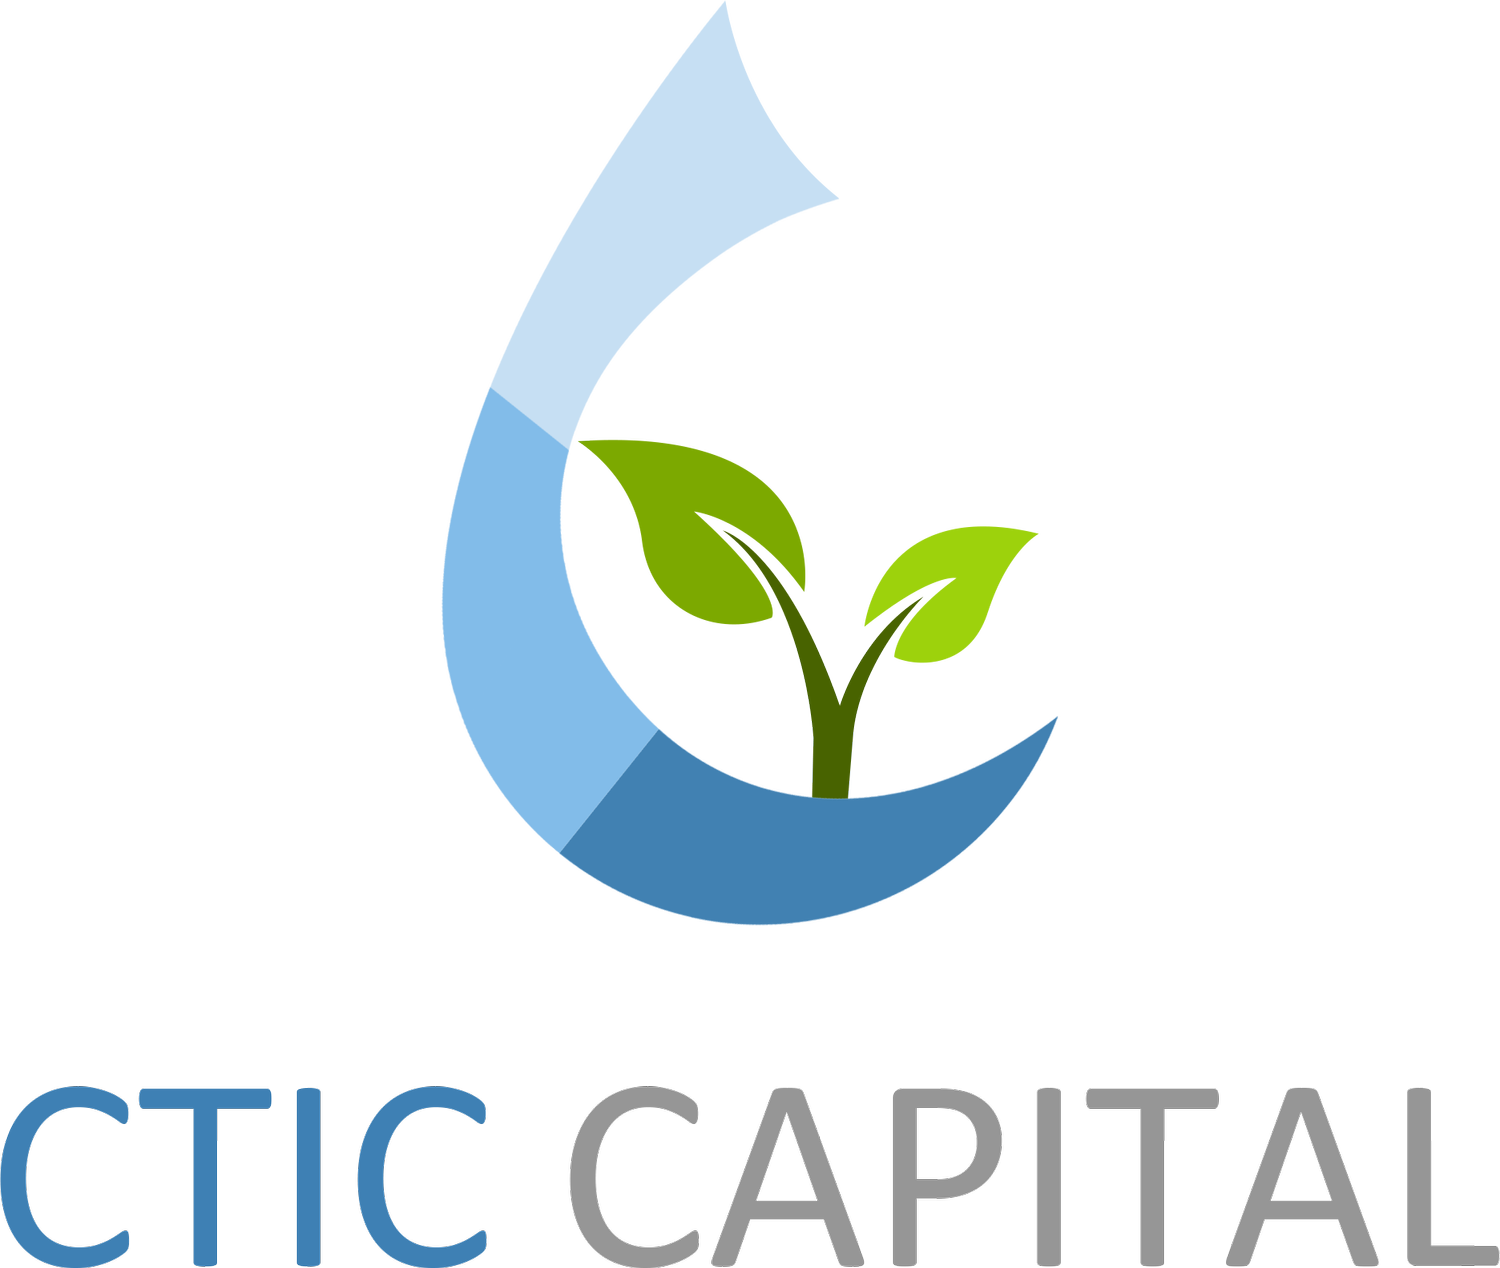 CTIC Capital